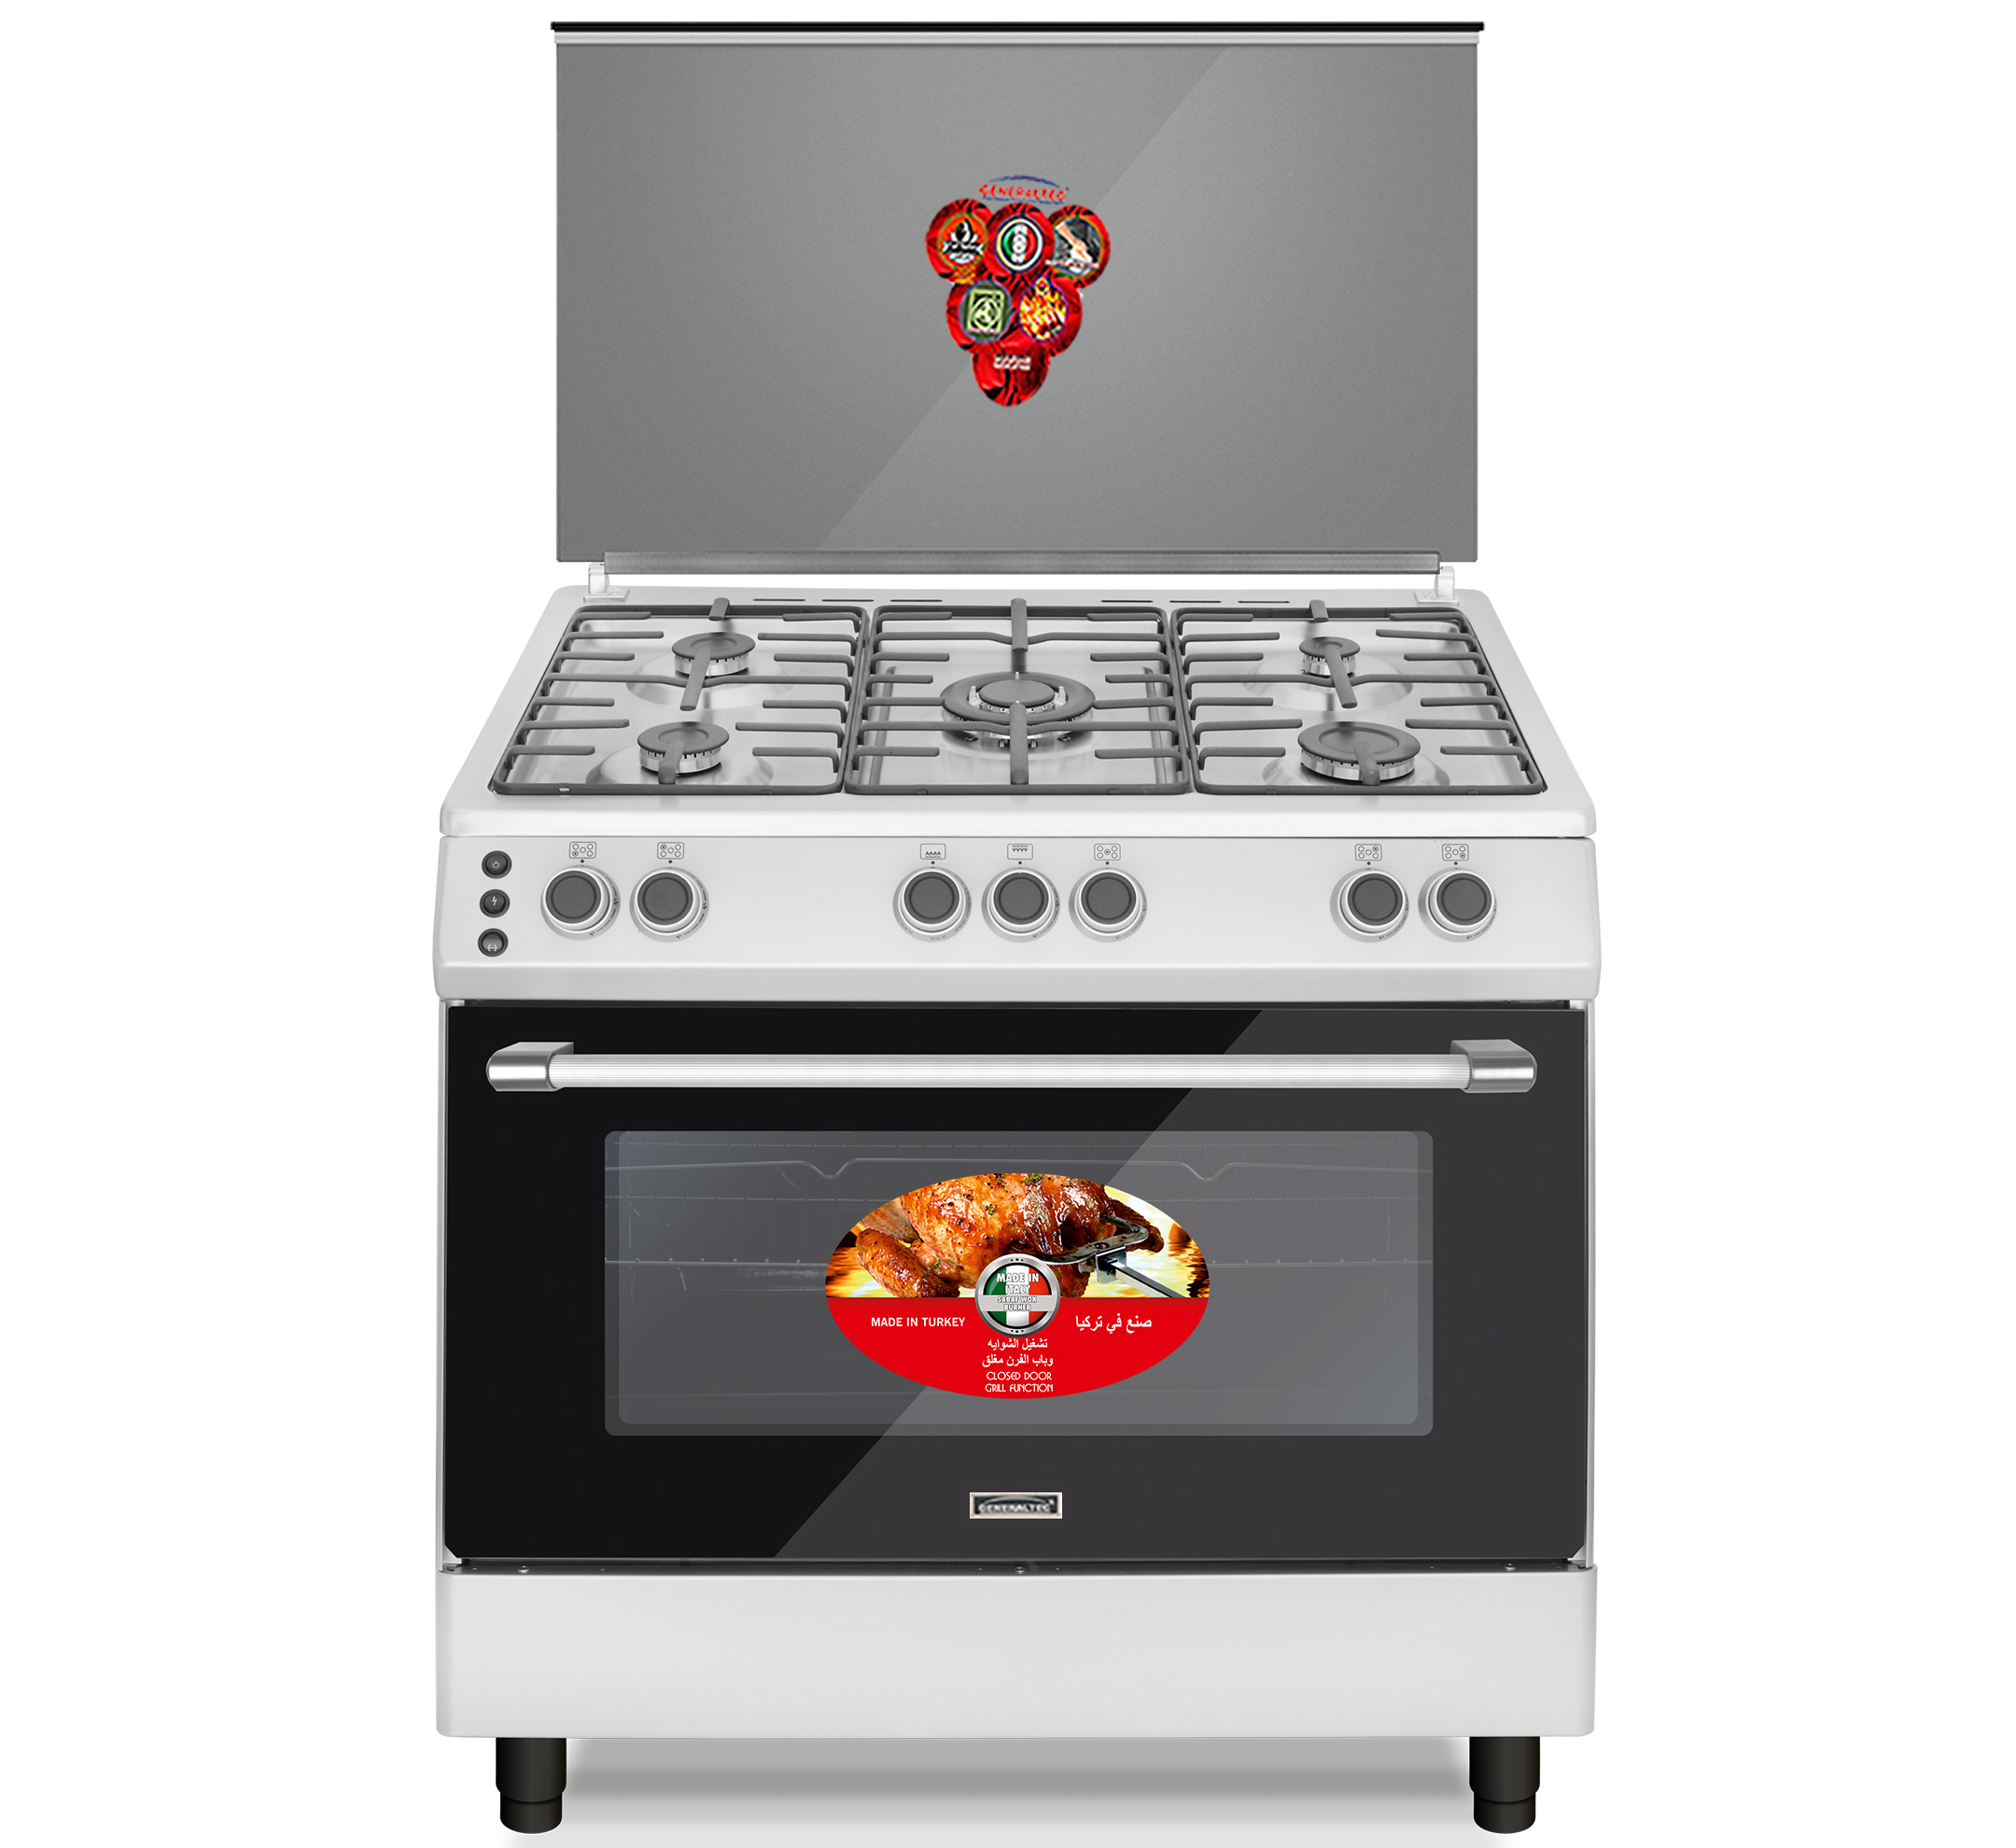 Cooking Range Model No. GCTR905DSS (90X60)